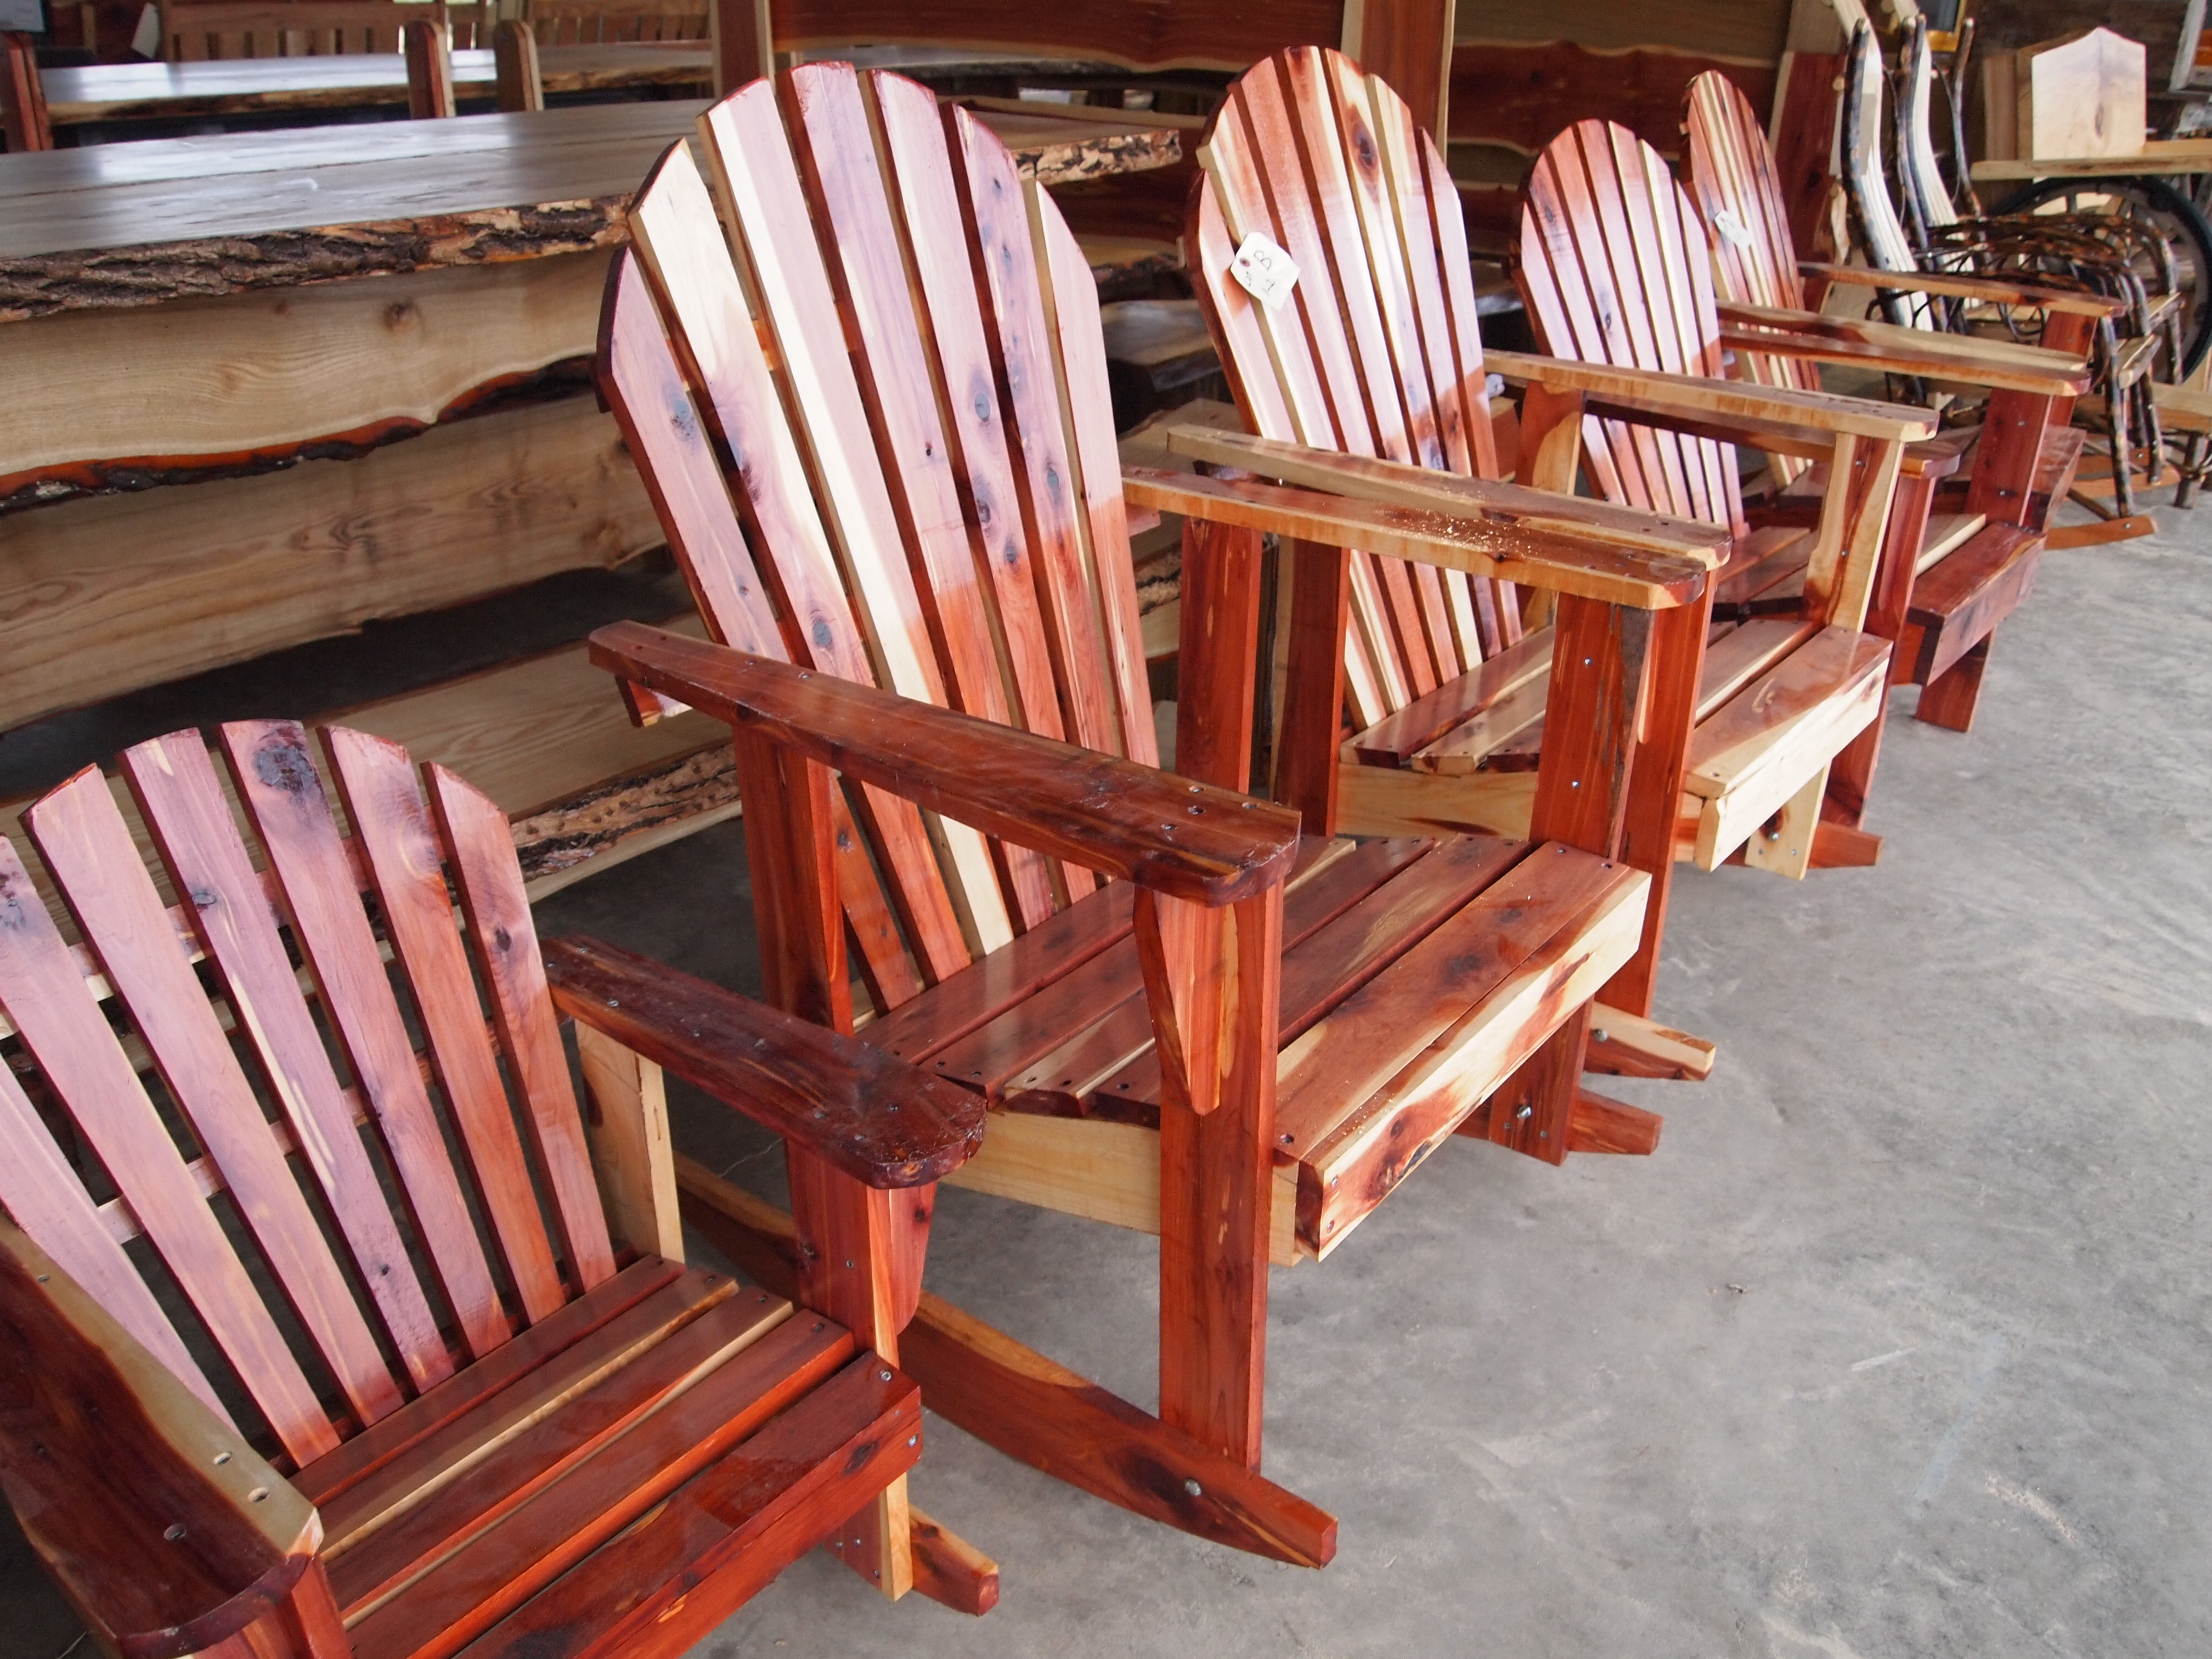 Handmade wooden rocking chairs